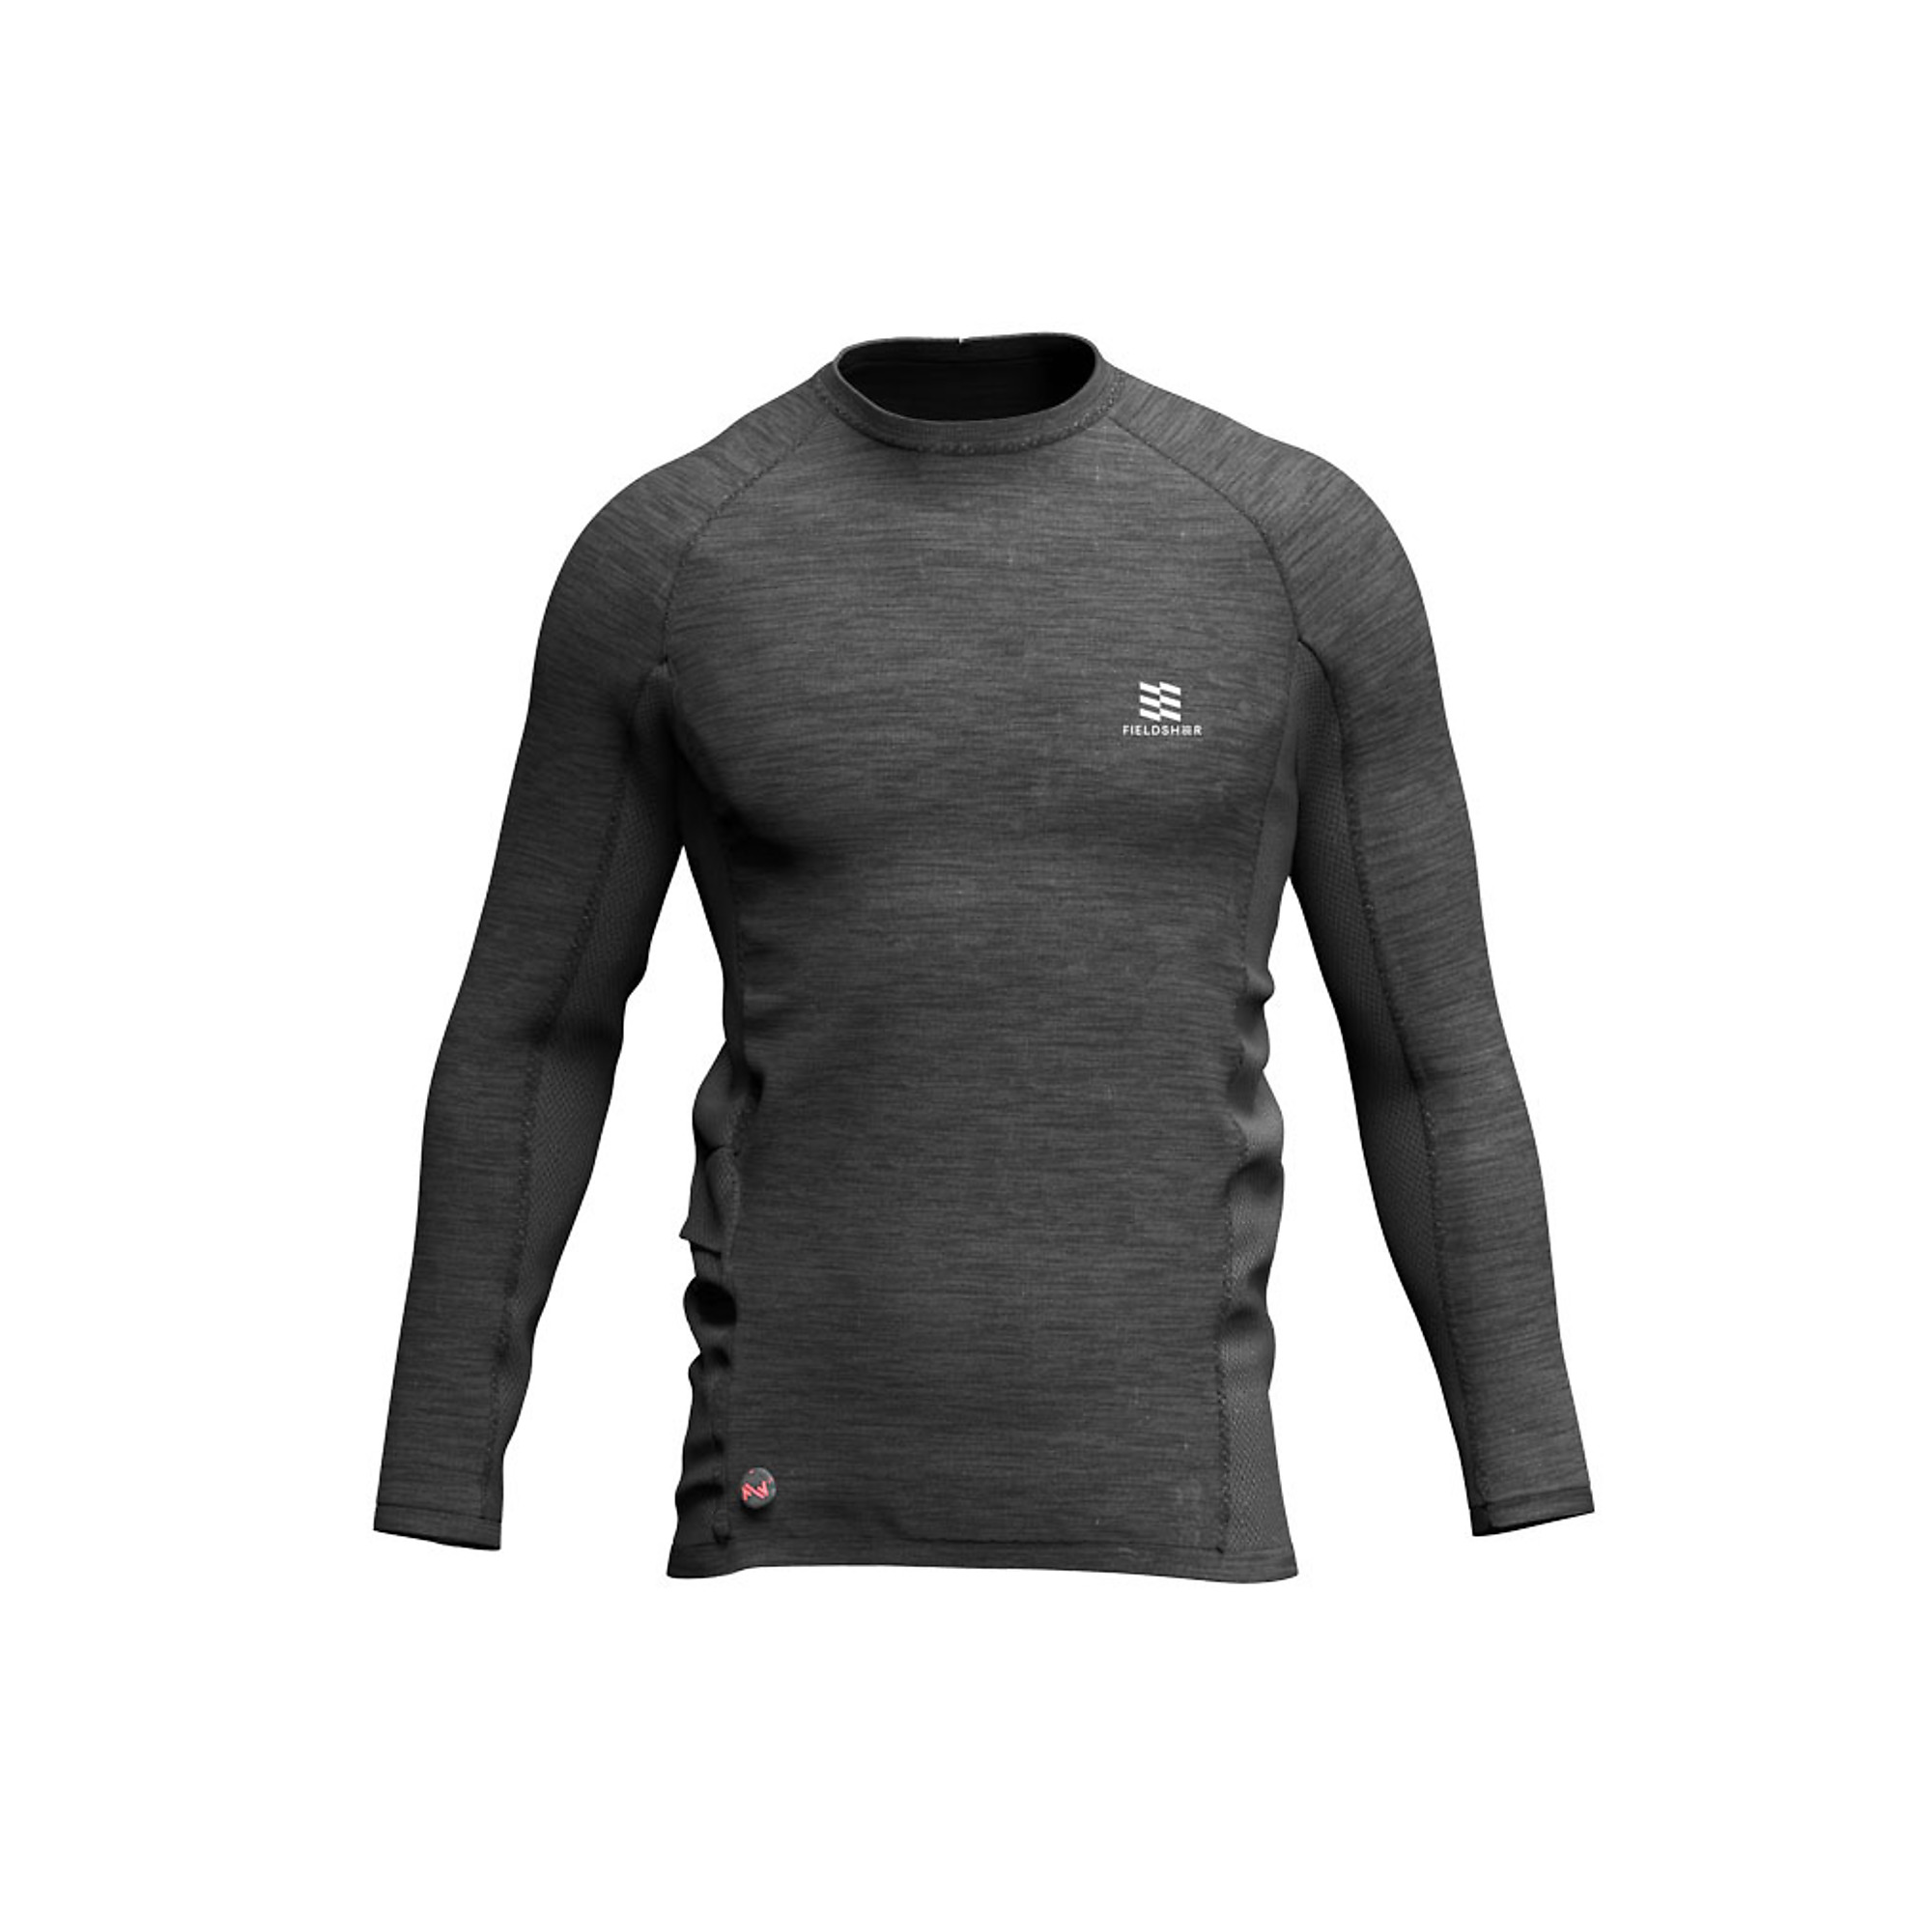 Fieldsheer, Men's Primer Heated Baselayer Shirt, Size 2XL, Color Black, Model MWMT11010620